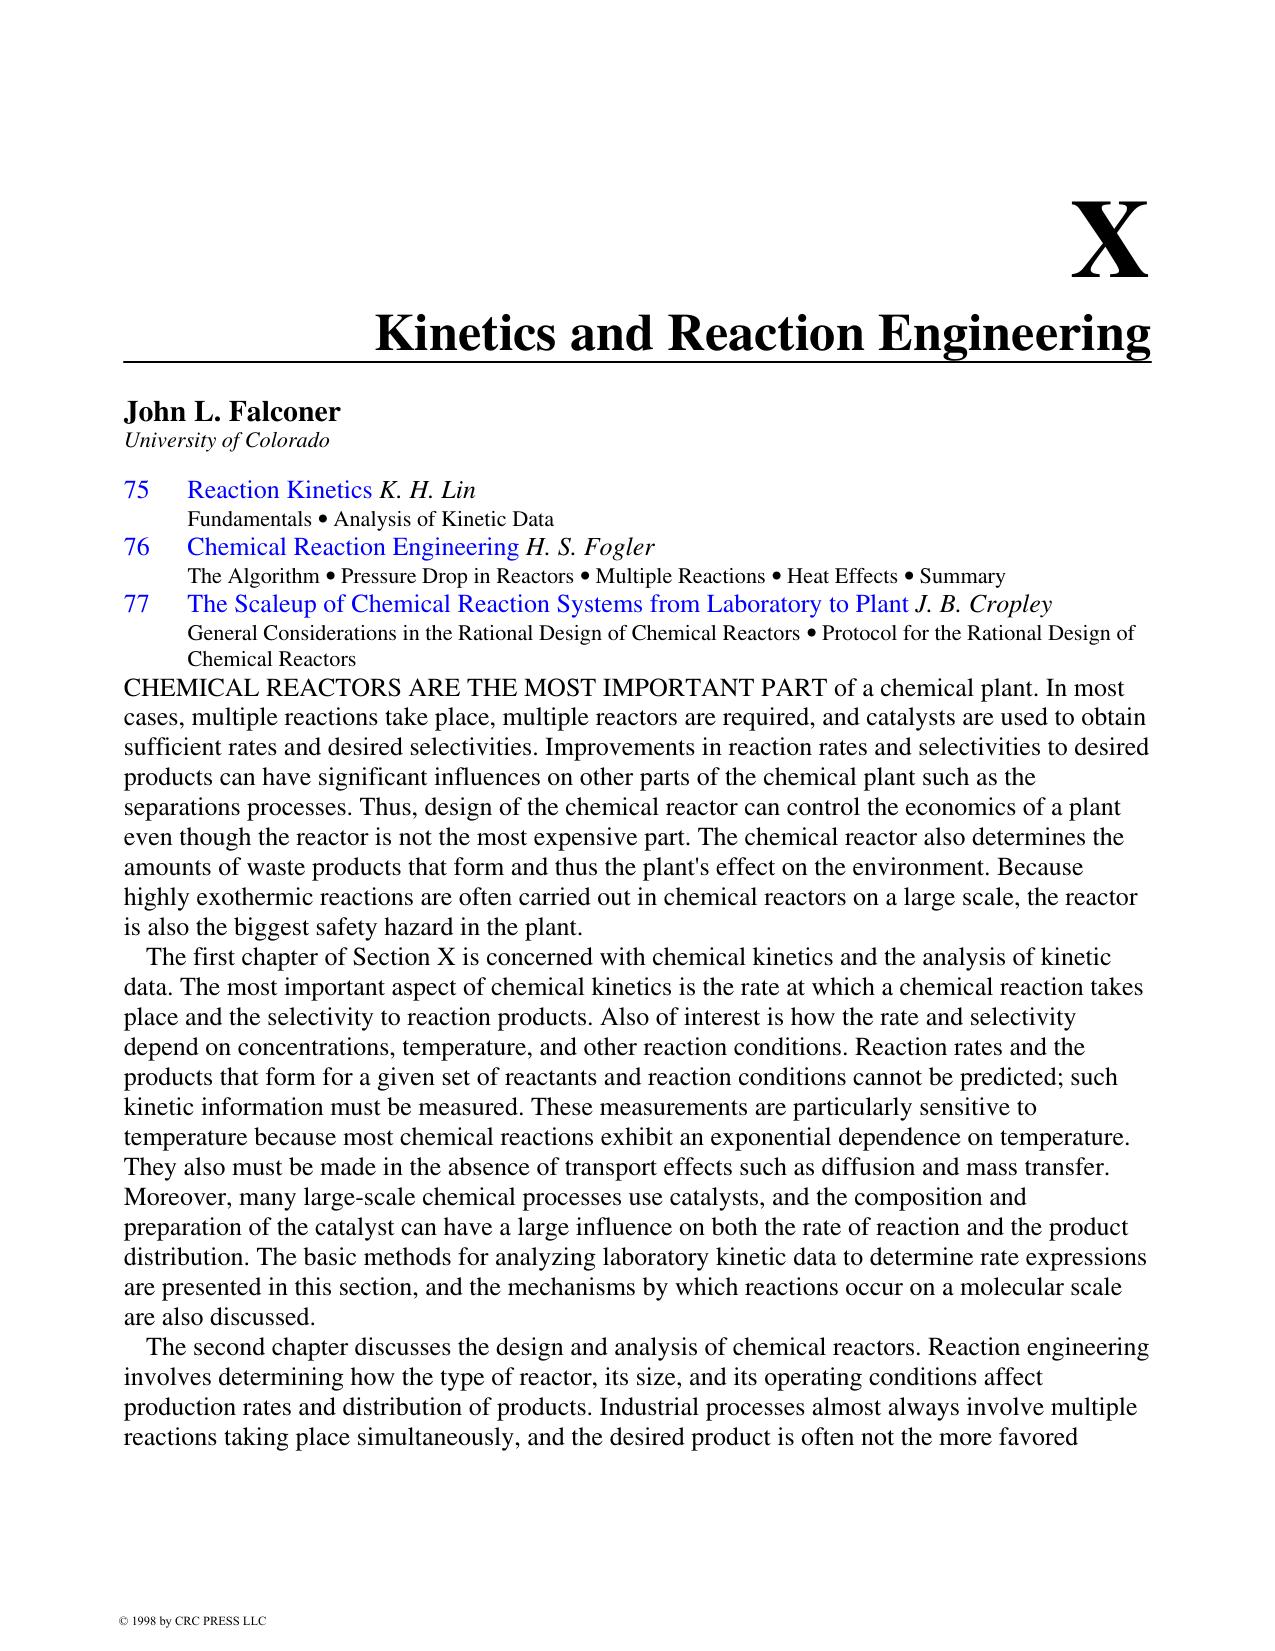 Chap X - Kinetics and Reaction Engineering